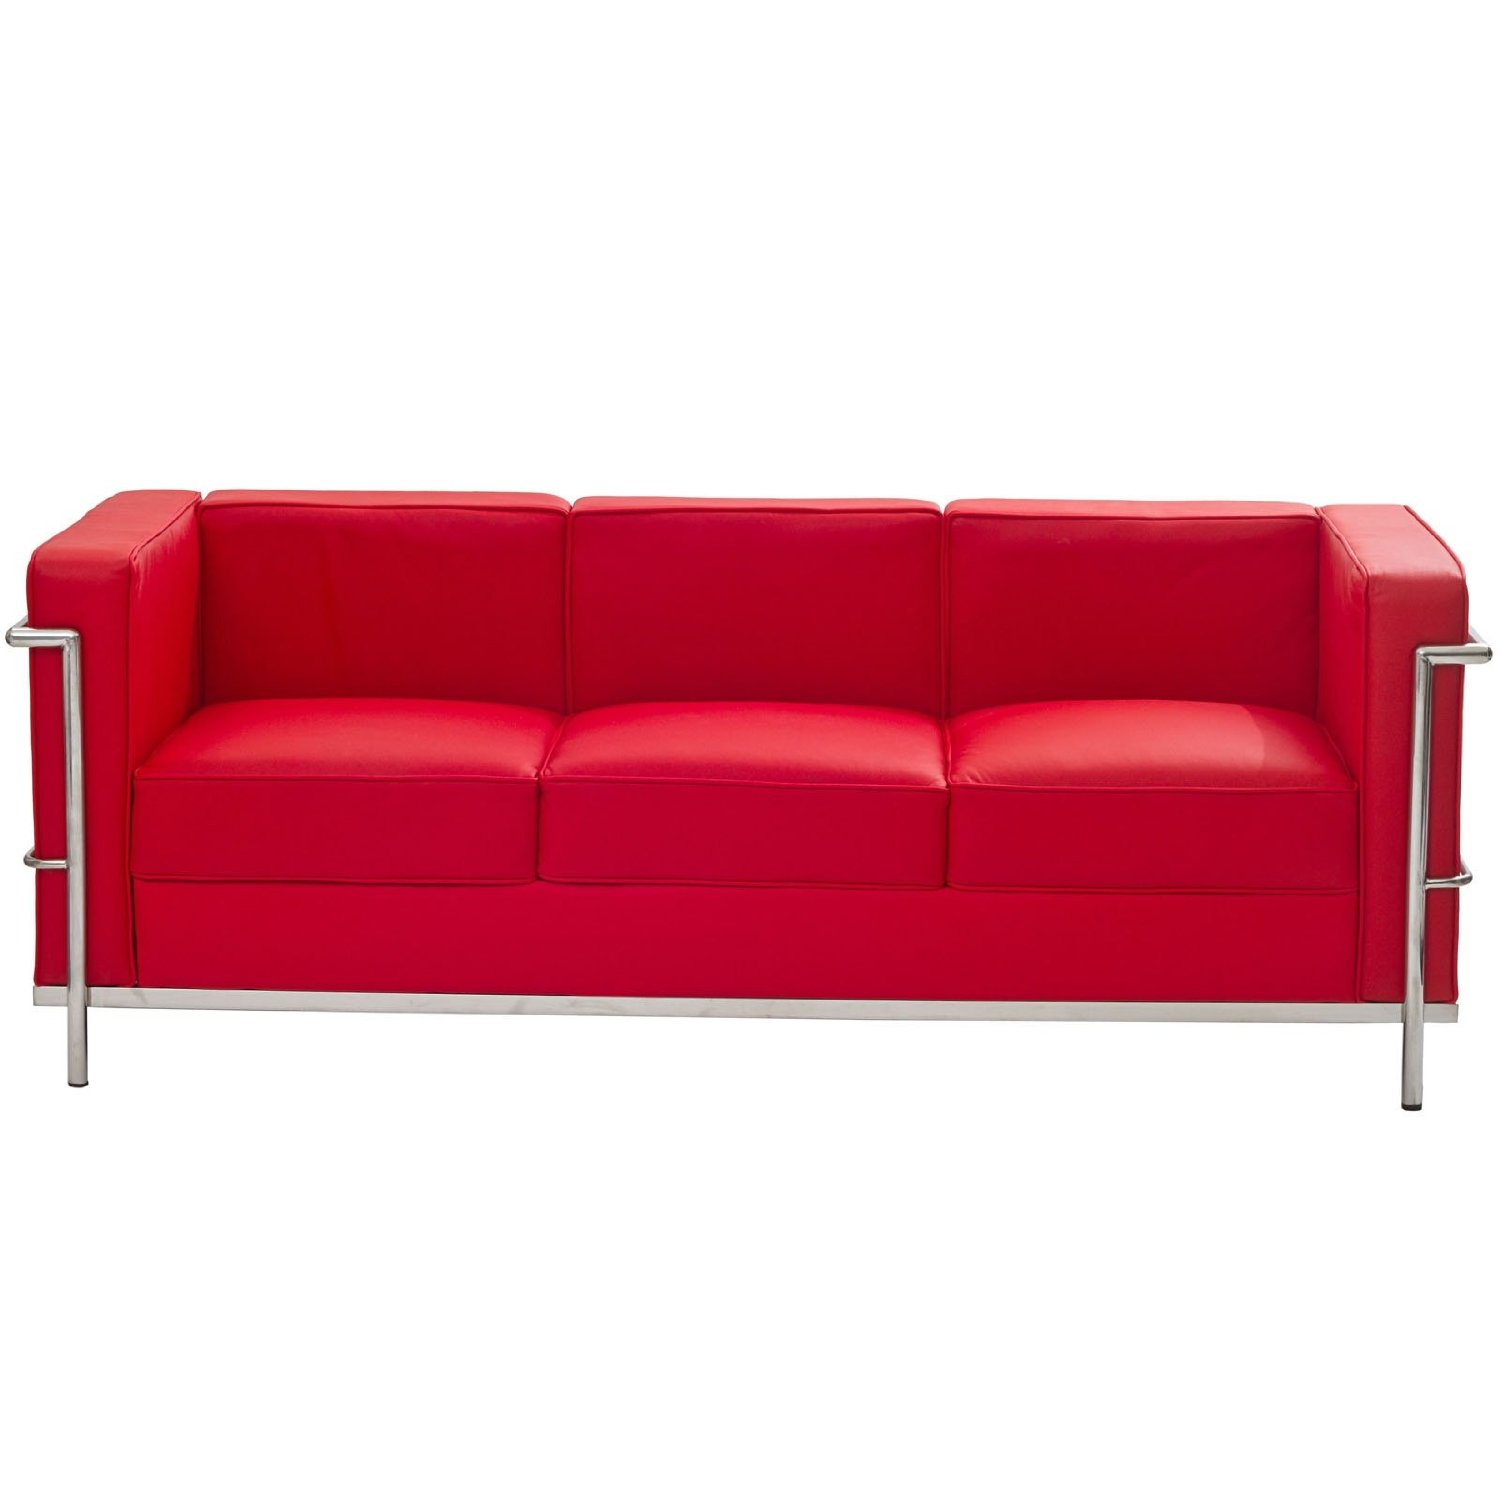 red sectional sleeper sofa photo - 7